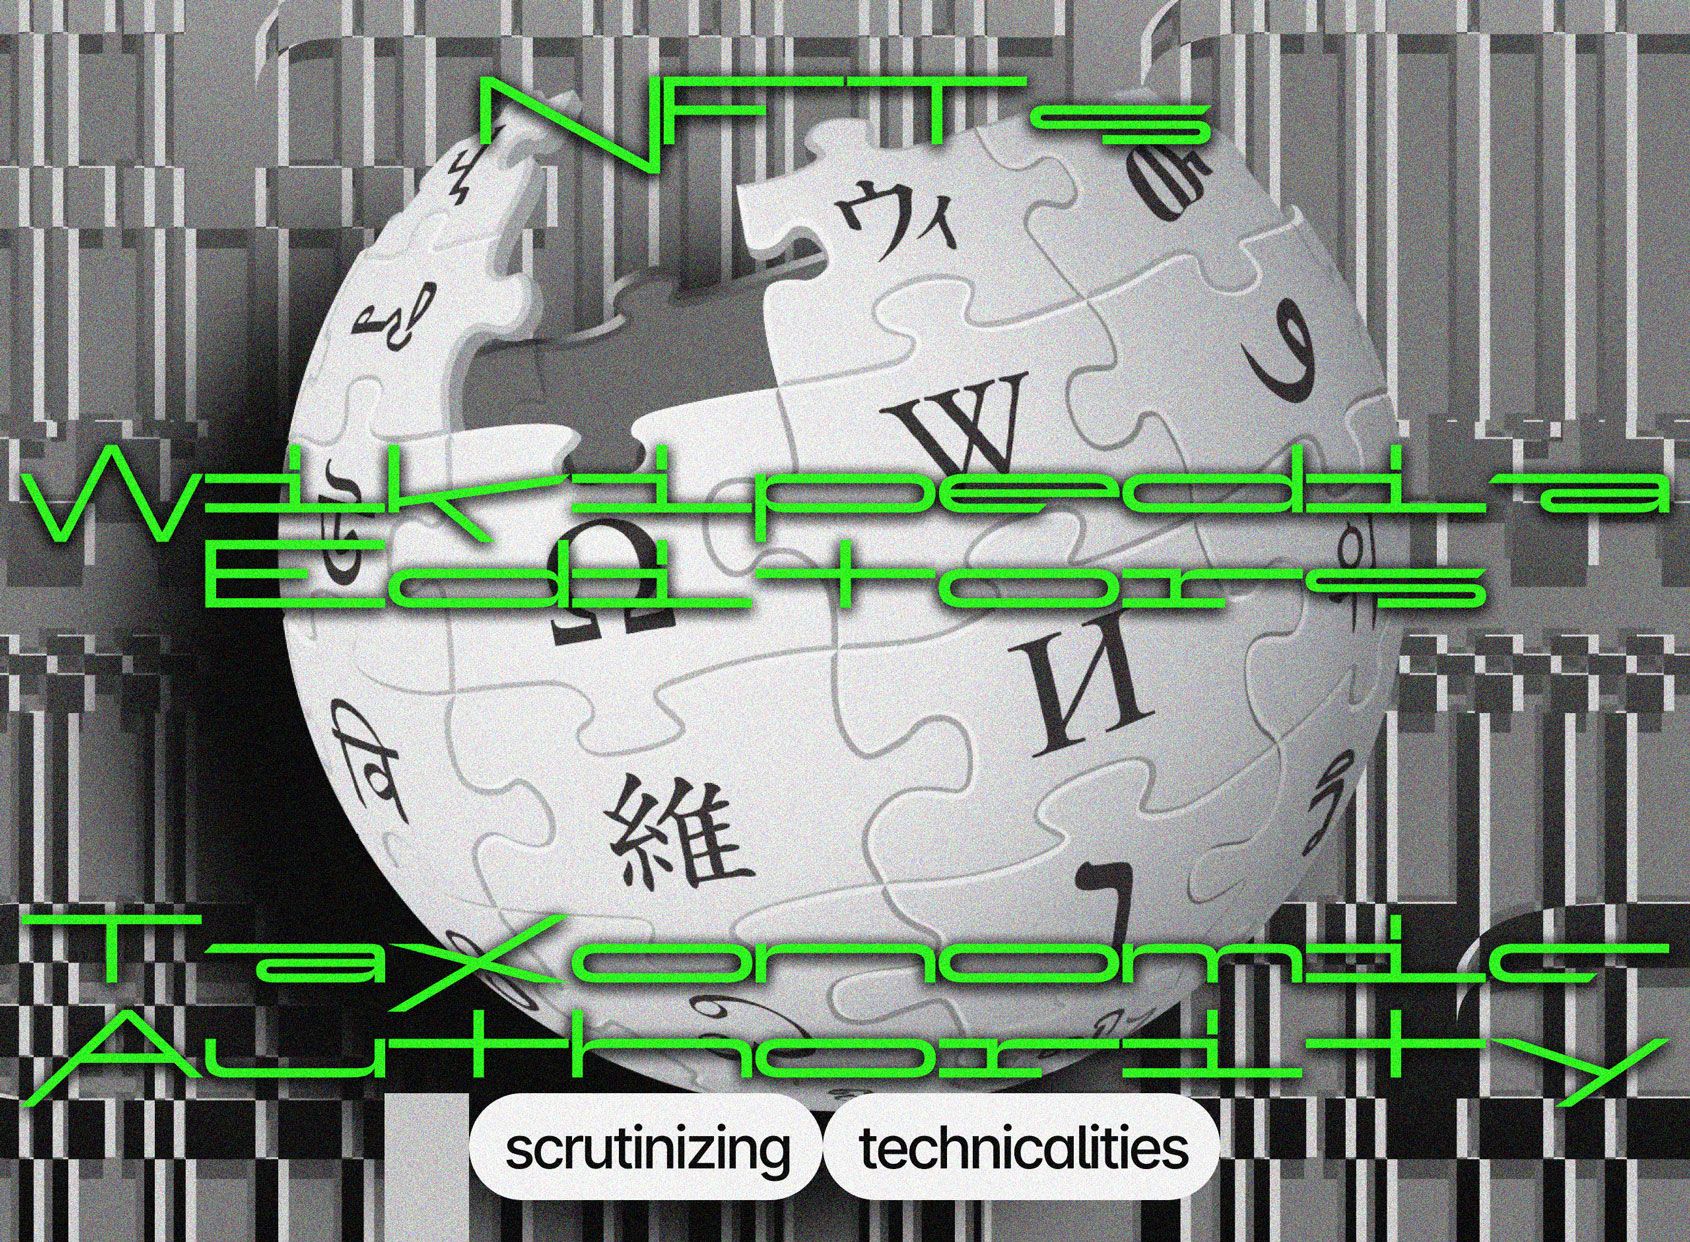 Jeff Koons - Wikipedia